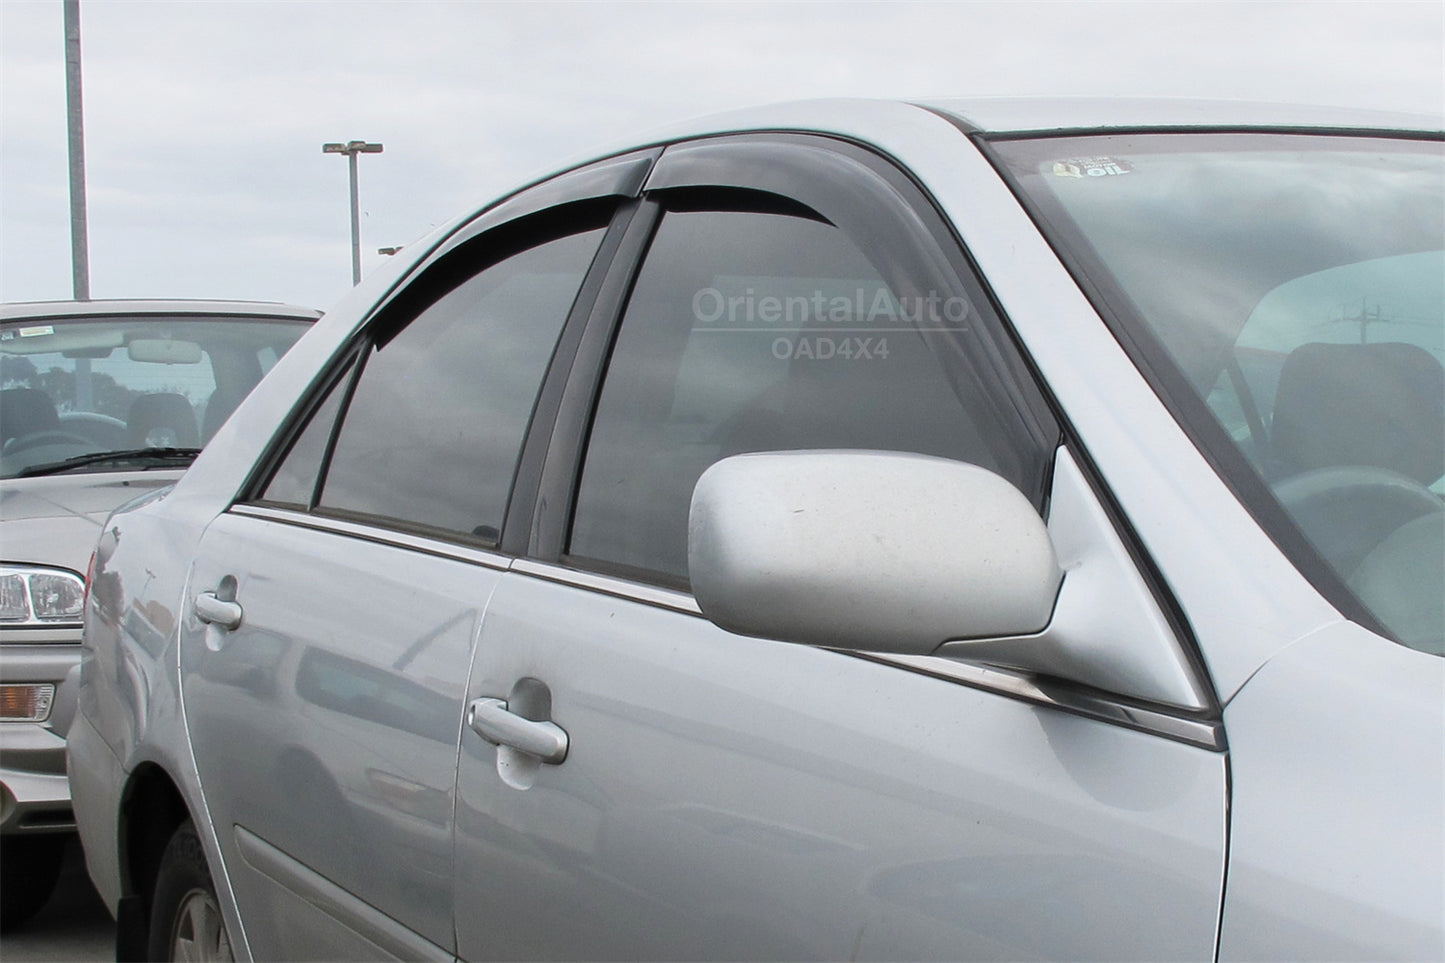 Premium Weather Shields Weathershields Window Visors For Toyota Camry 2002-2006